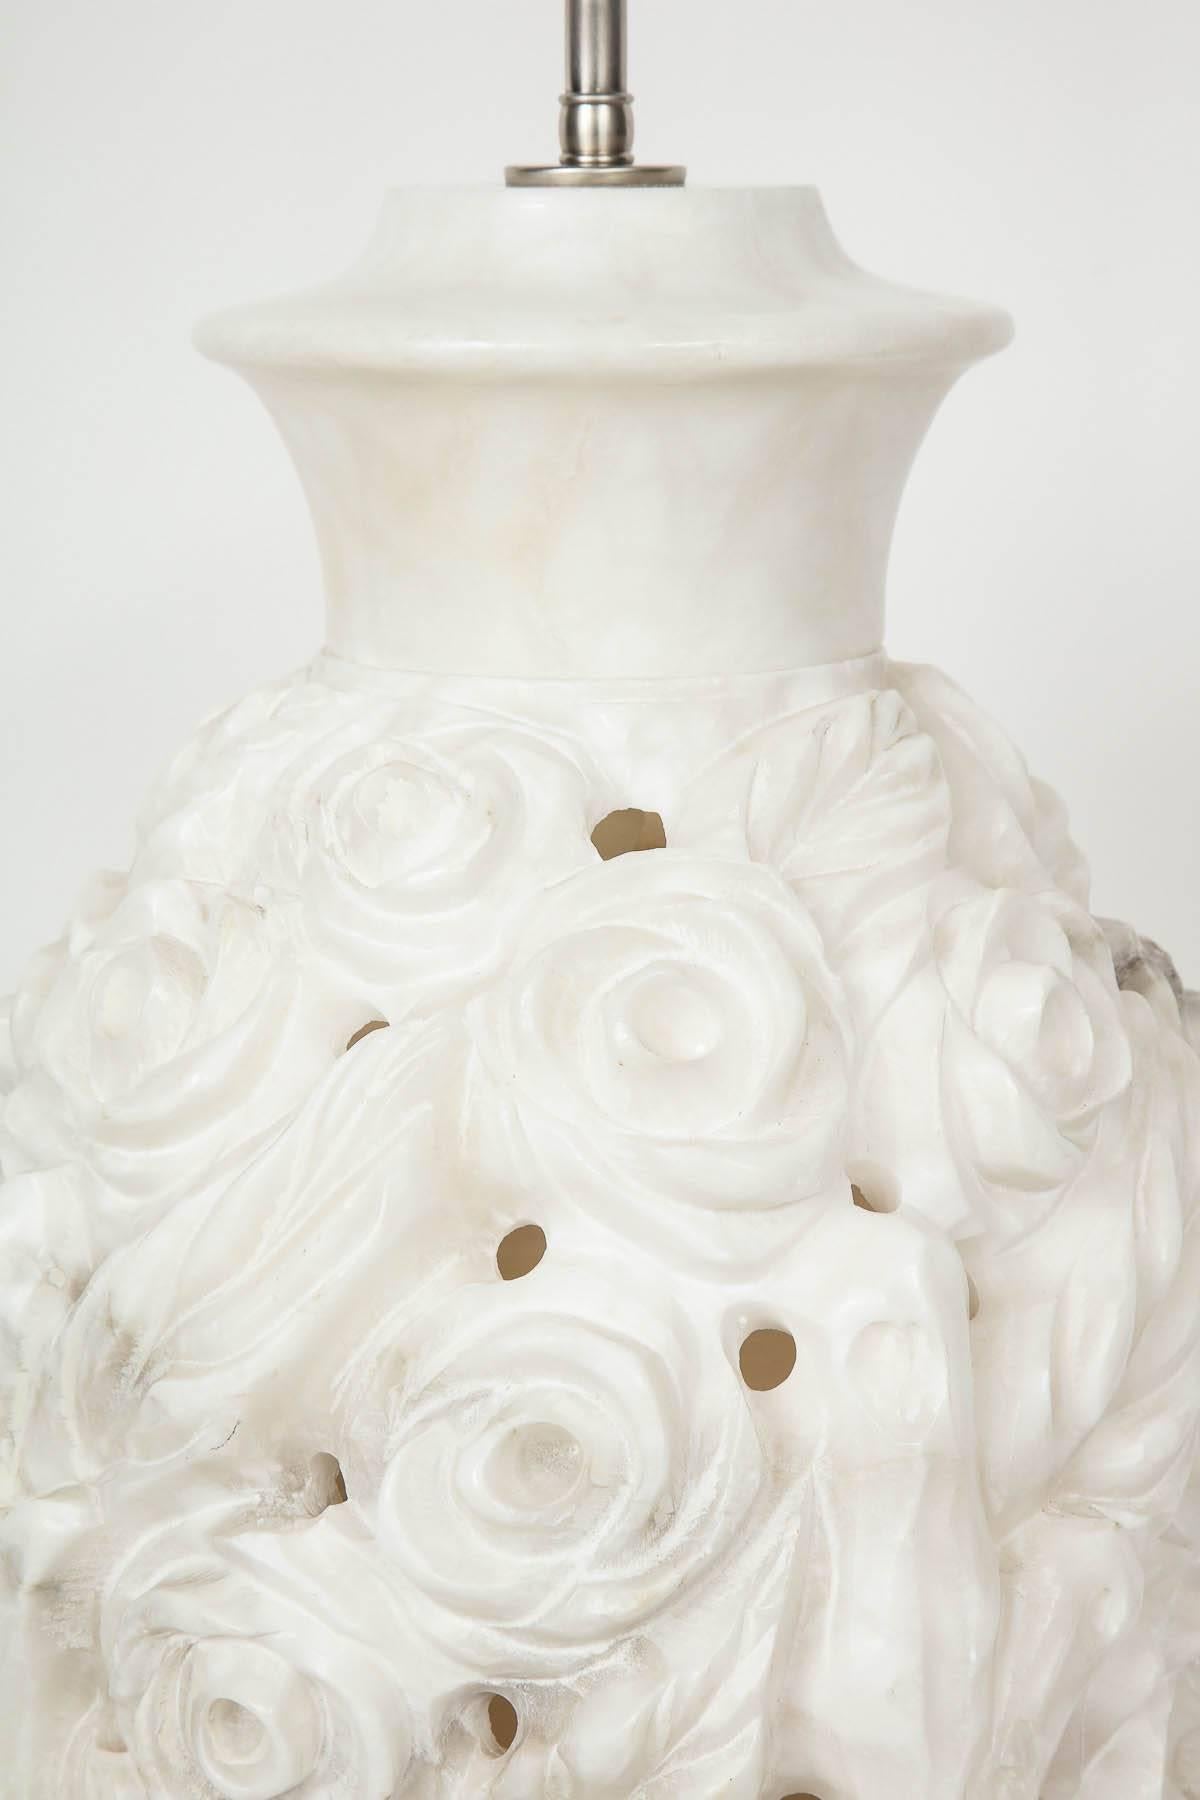 Hollywood Regency Large Italian Hand-Carved Alabaster Floral Lamps For Sale